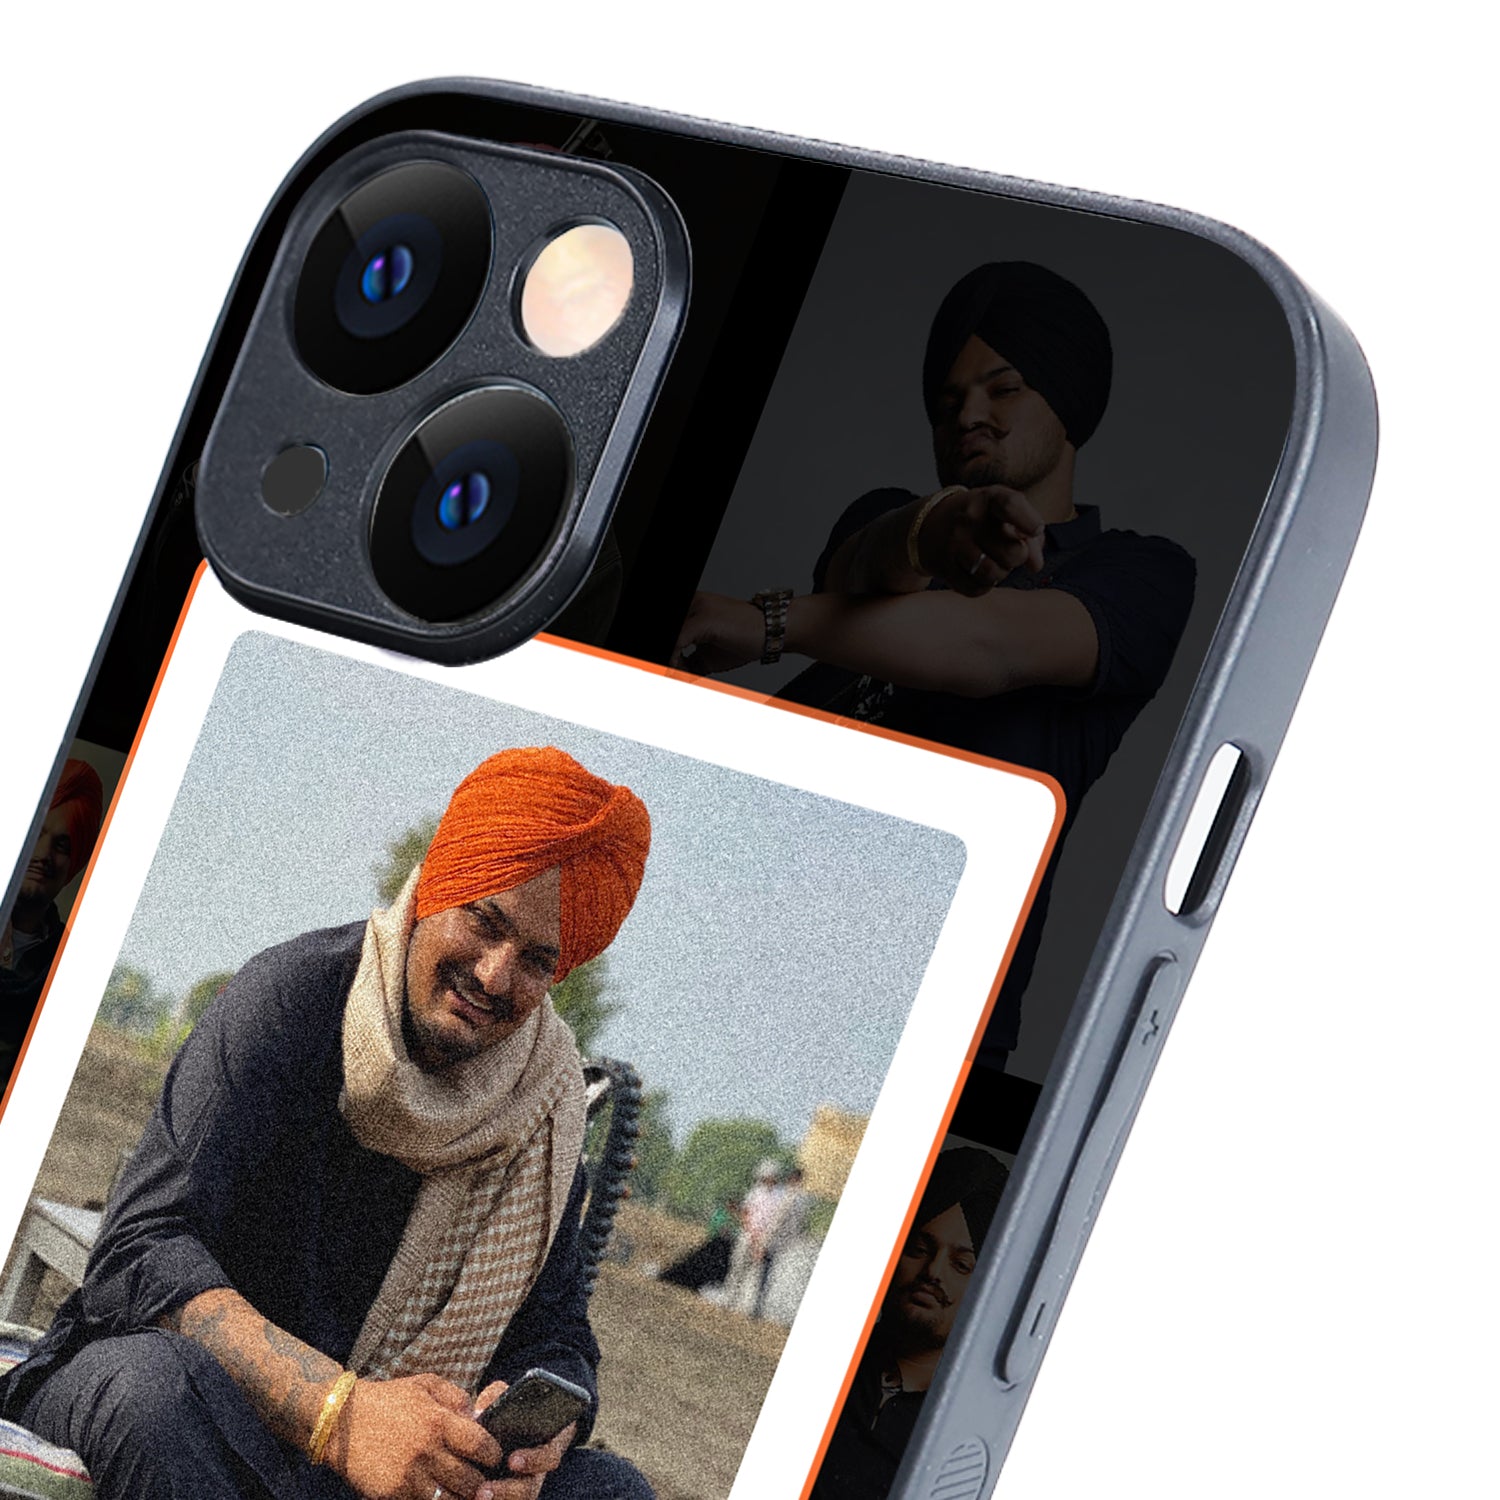 295 Song Sidhu Moosewala iPhone 14 Plus Case